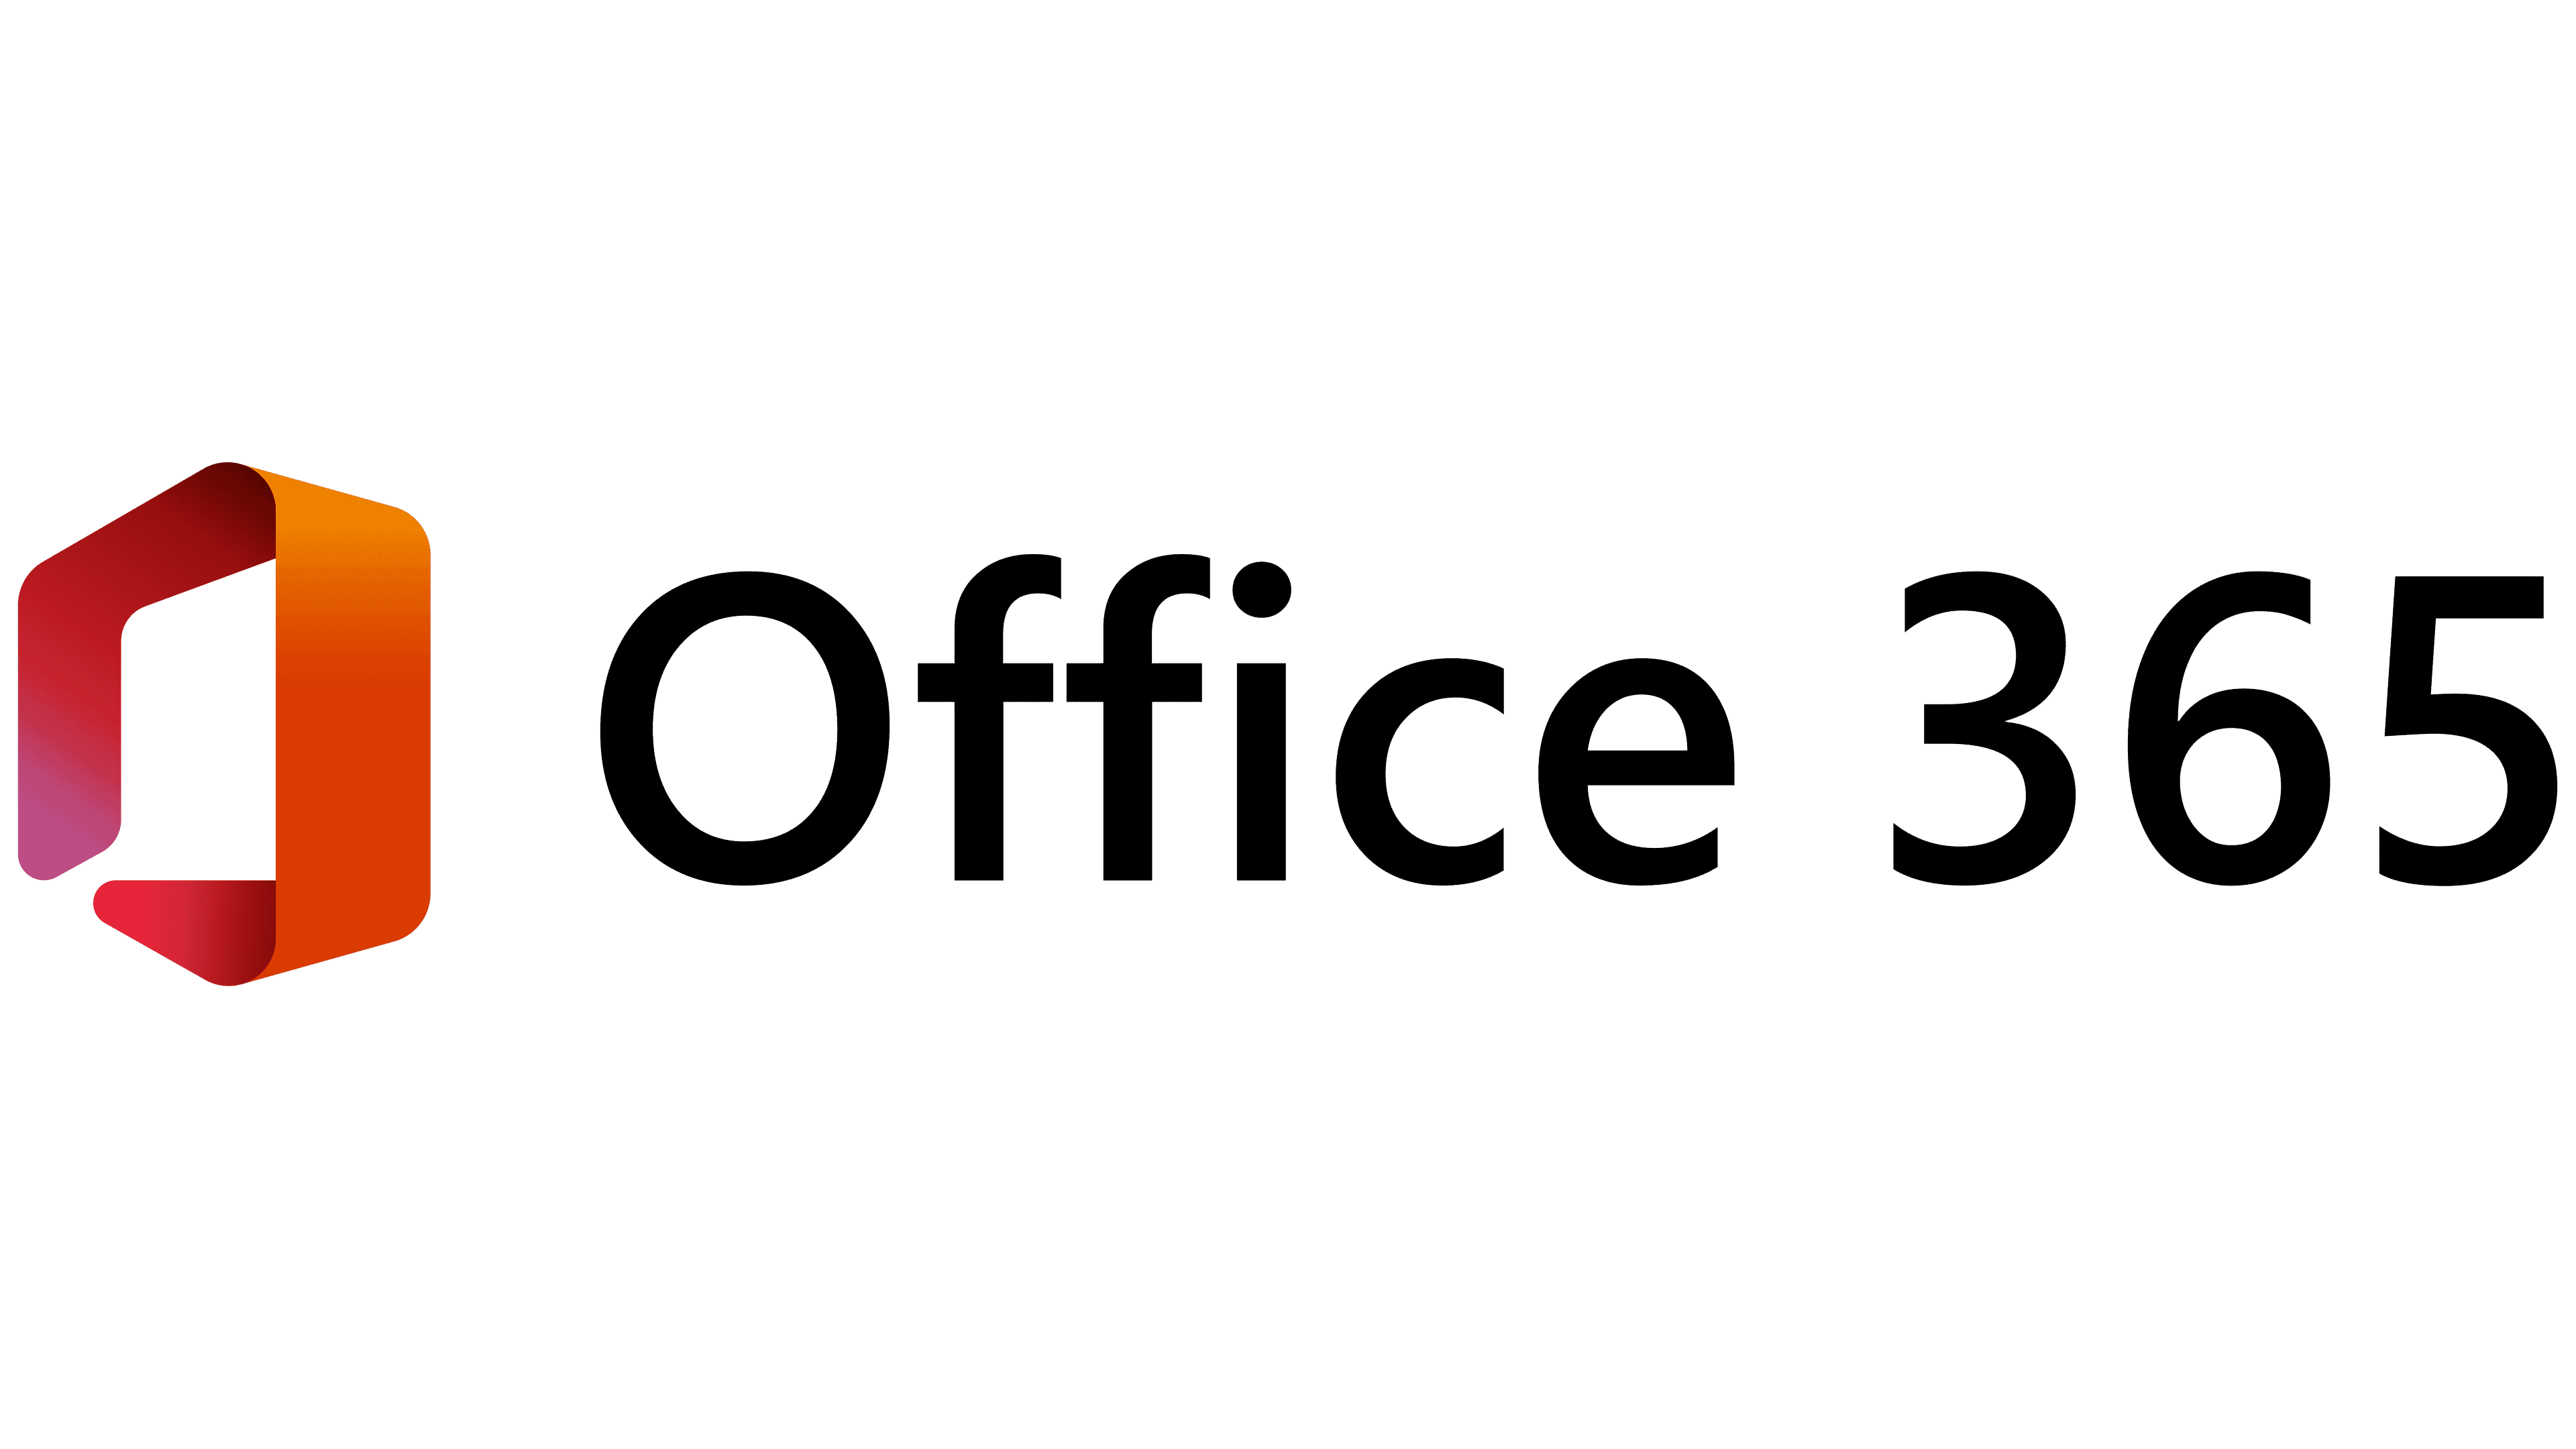 Office365 Compare All